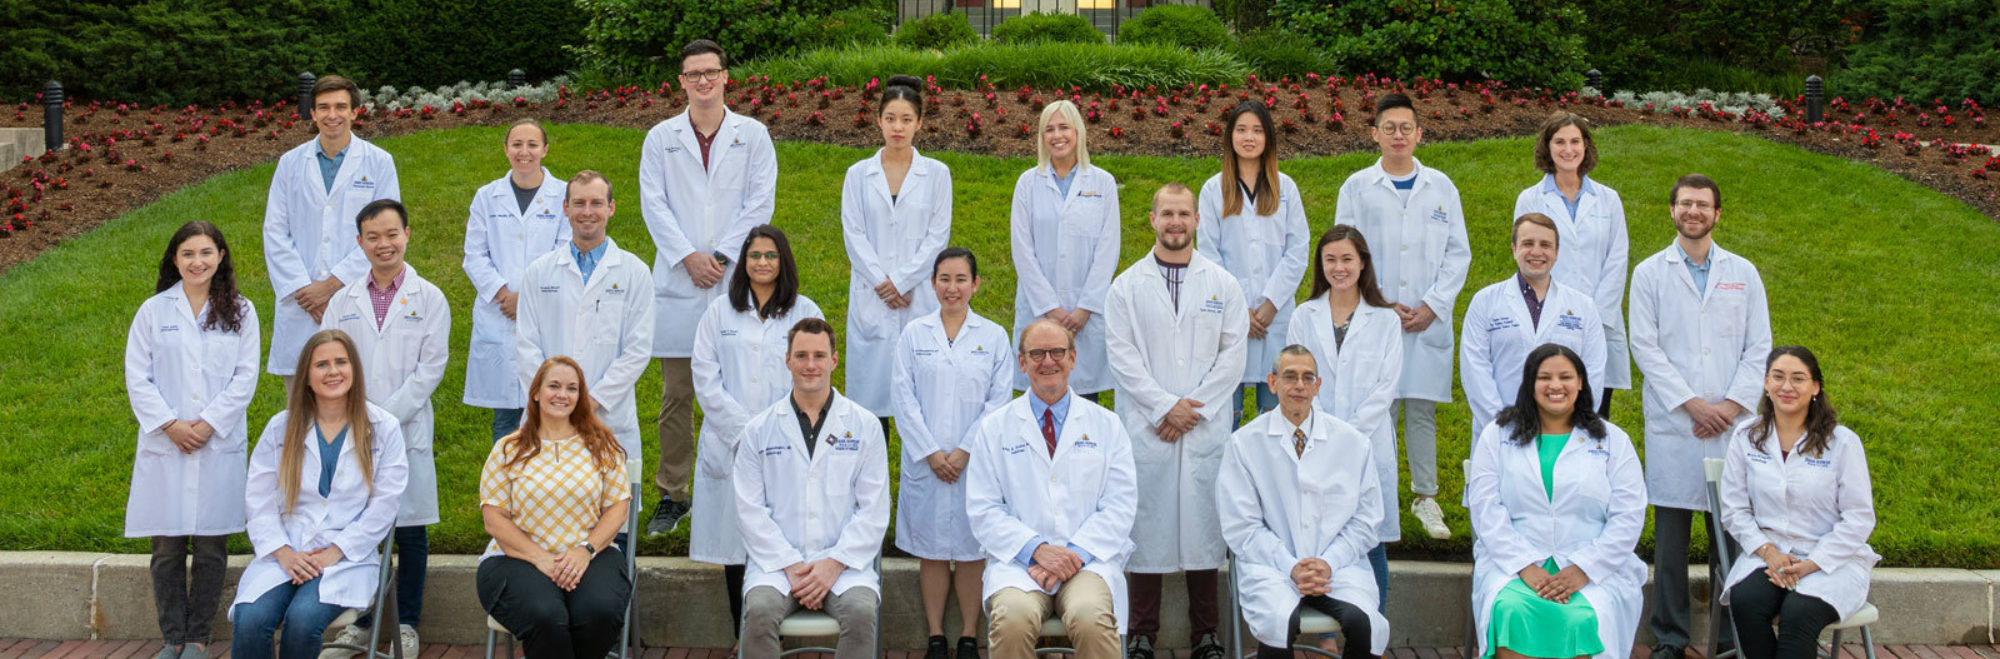 Johns Hopkins Pathobiology PhD Program Group Picture 2021